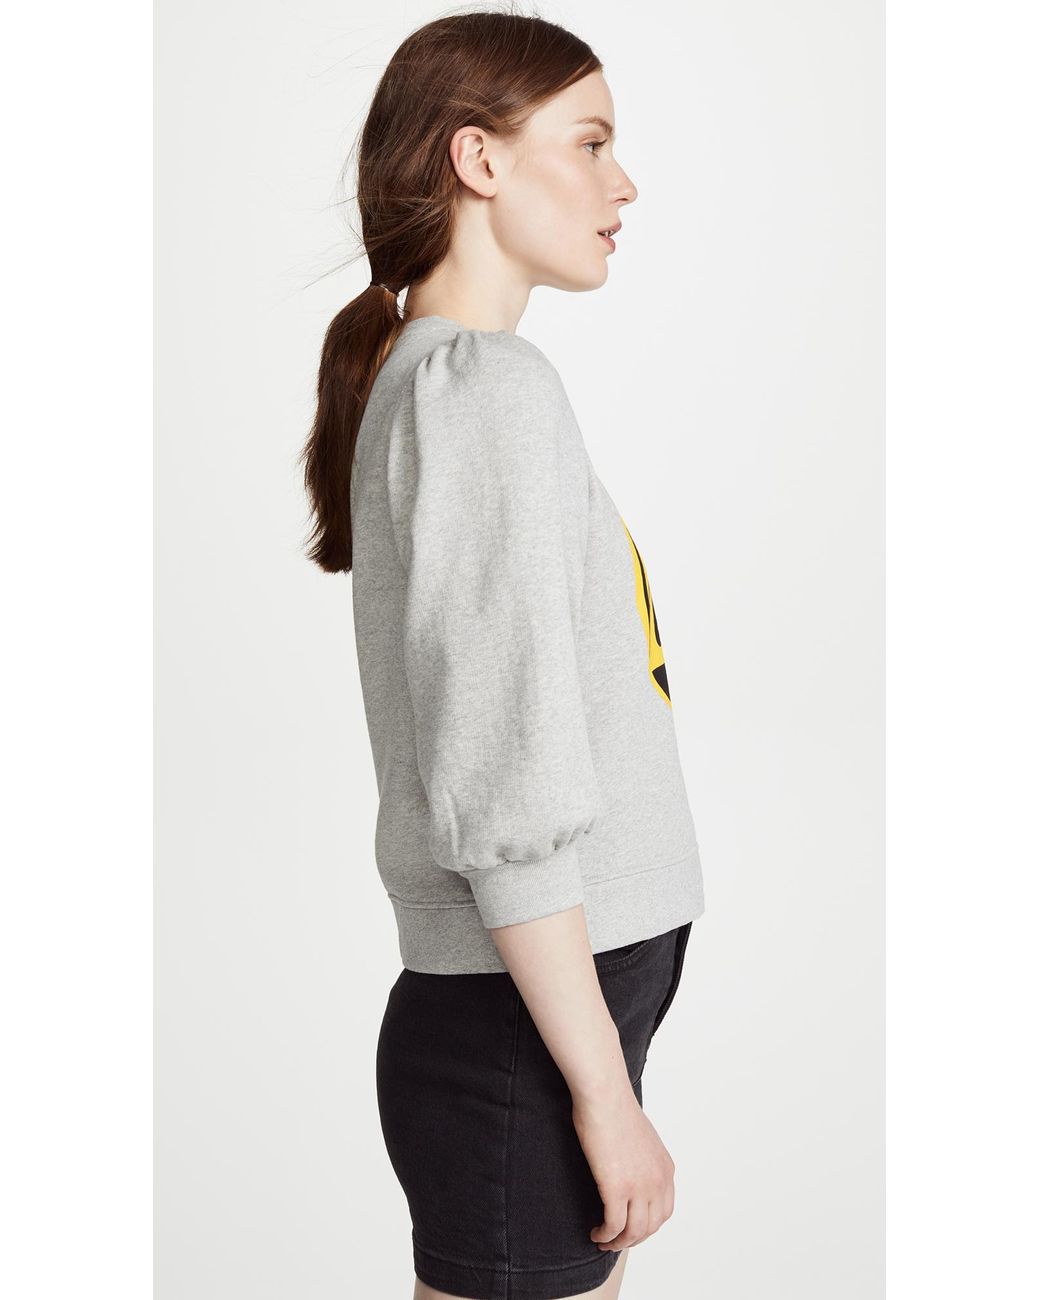 Ganni Honey Sweatshirt in Gray | Lyst